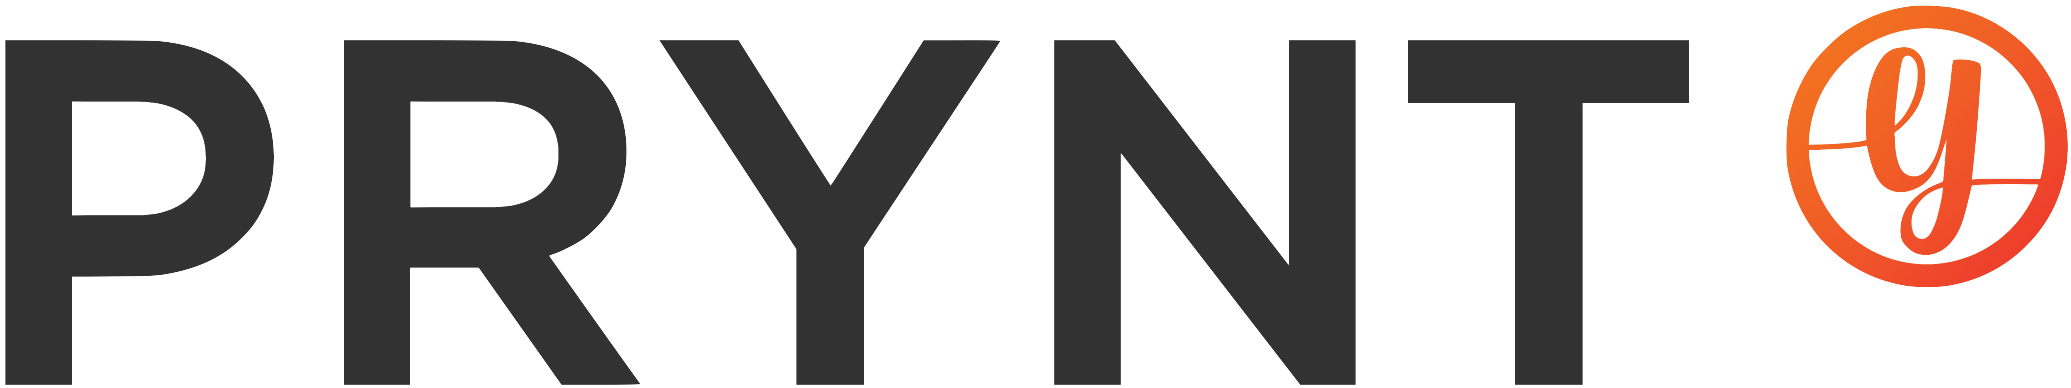 Prynt Logo